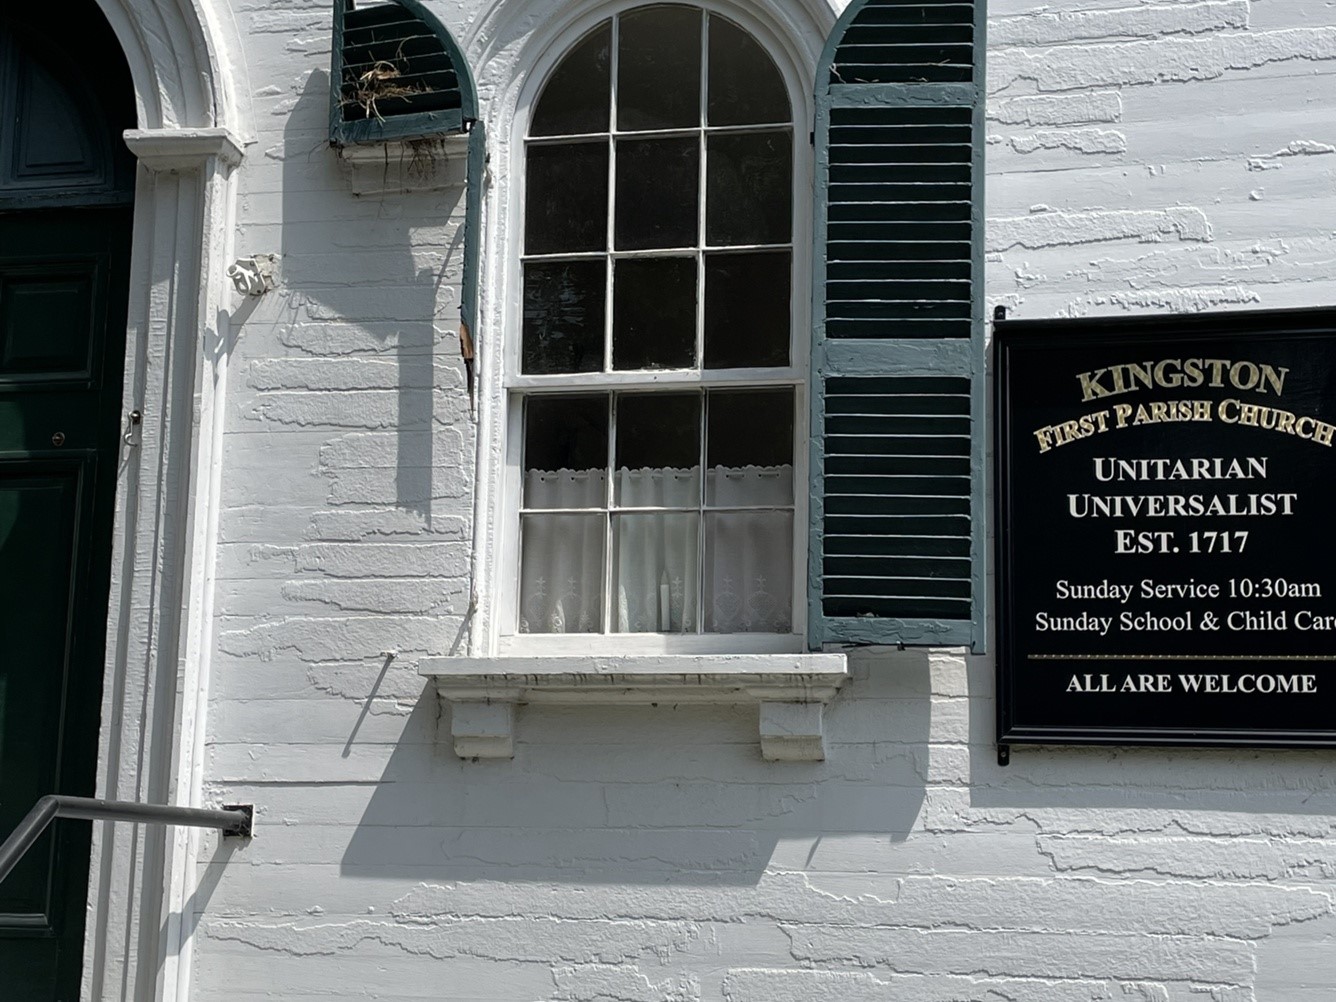 Kingston church seeks help funding restoration